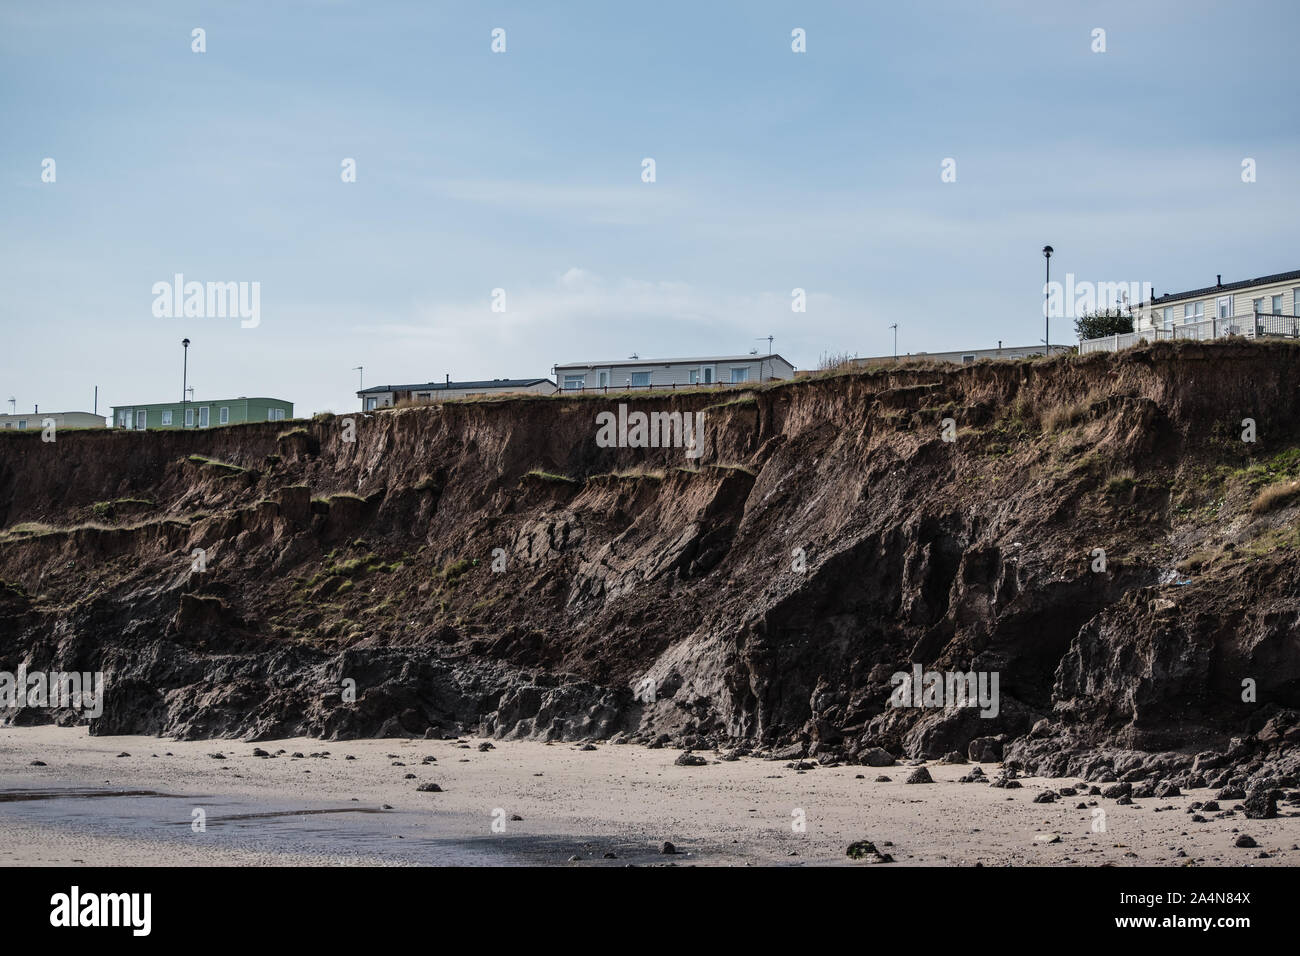 Hornsea on The Holderness Coastline, one of Europe's fastest eroding coastlines, showing examples of coastal erosion. Stock Photo